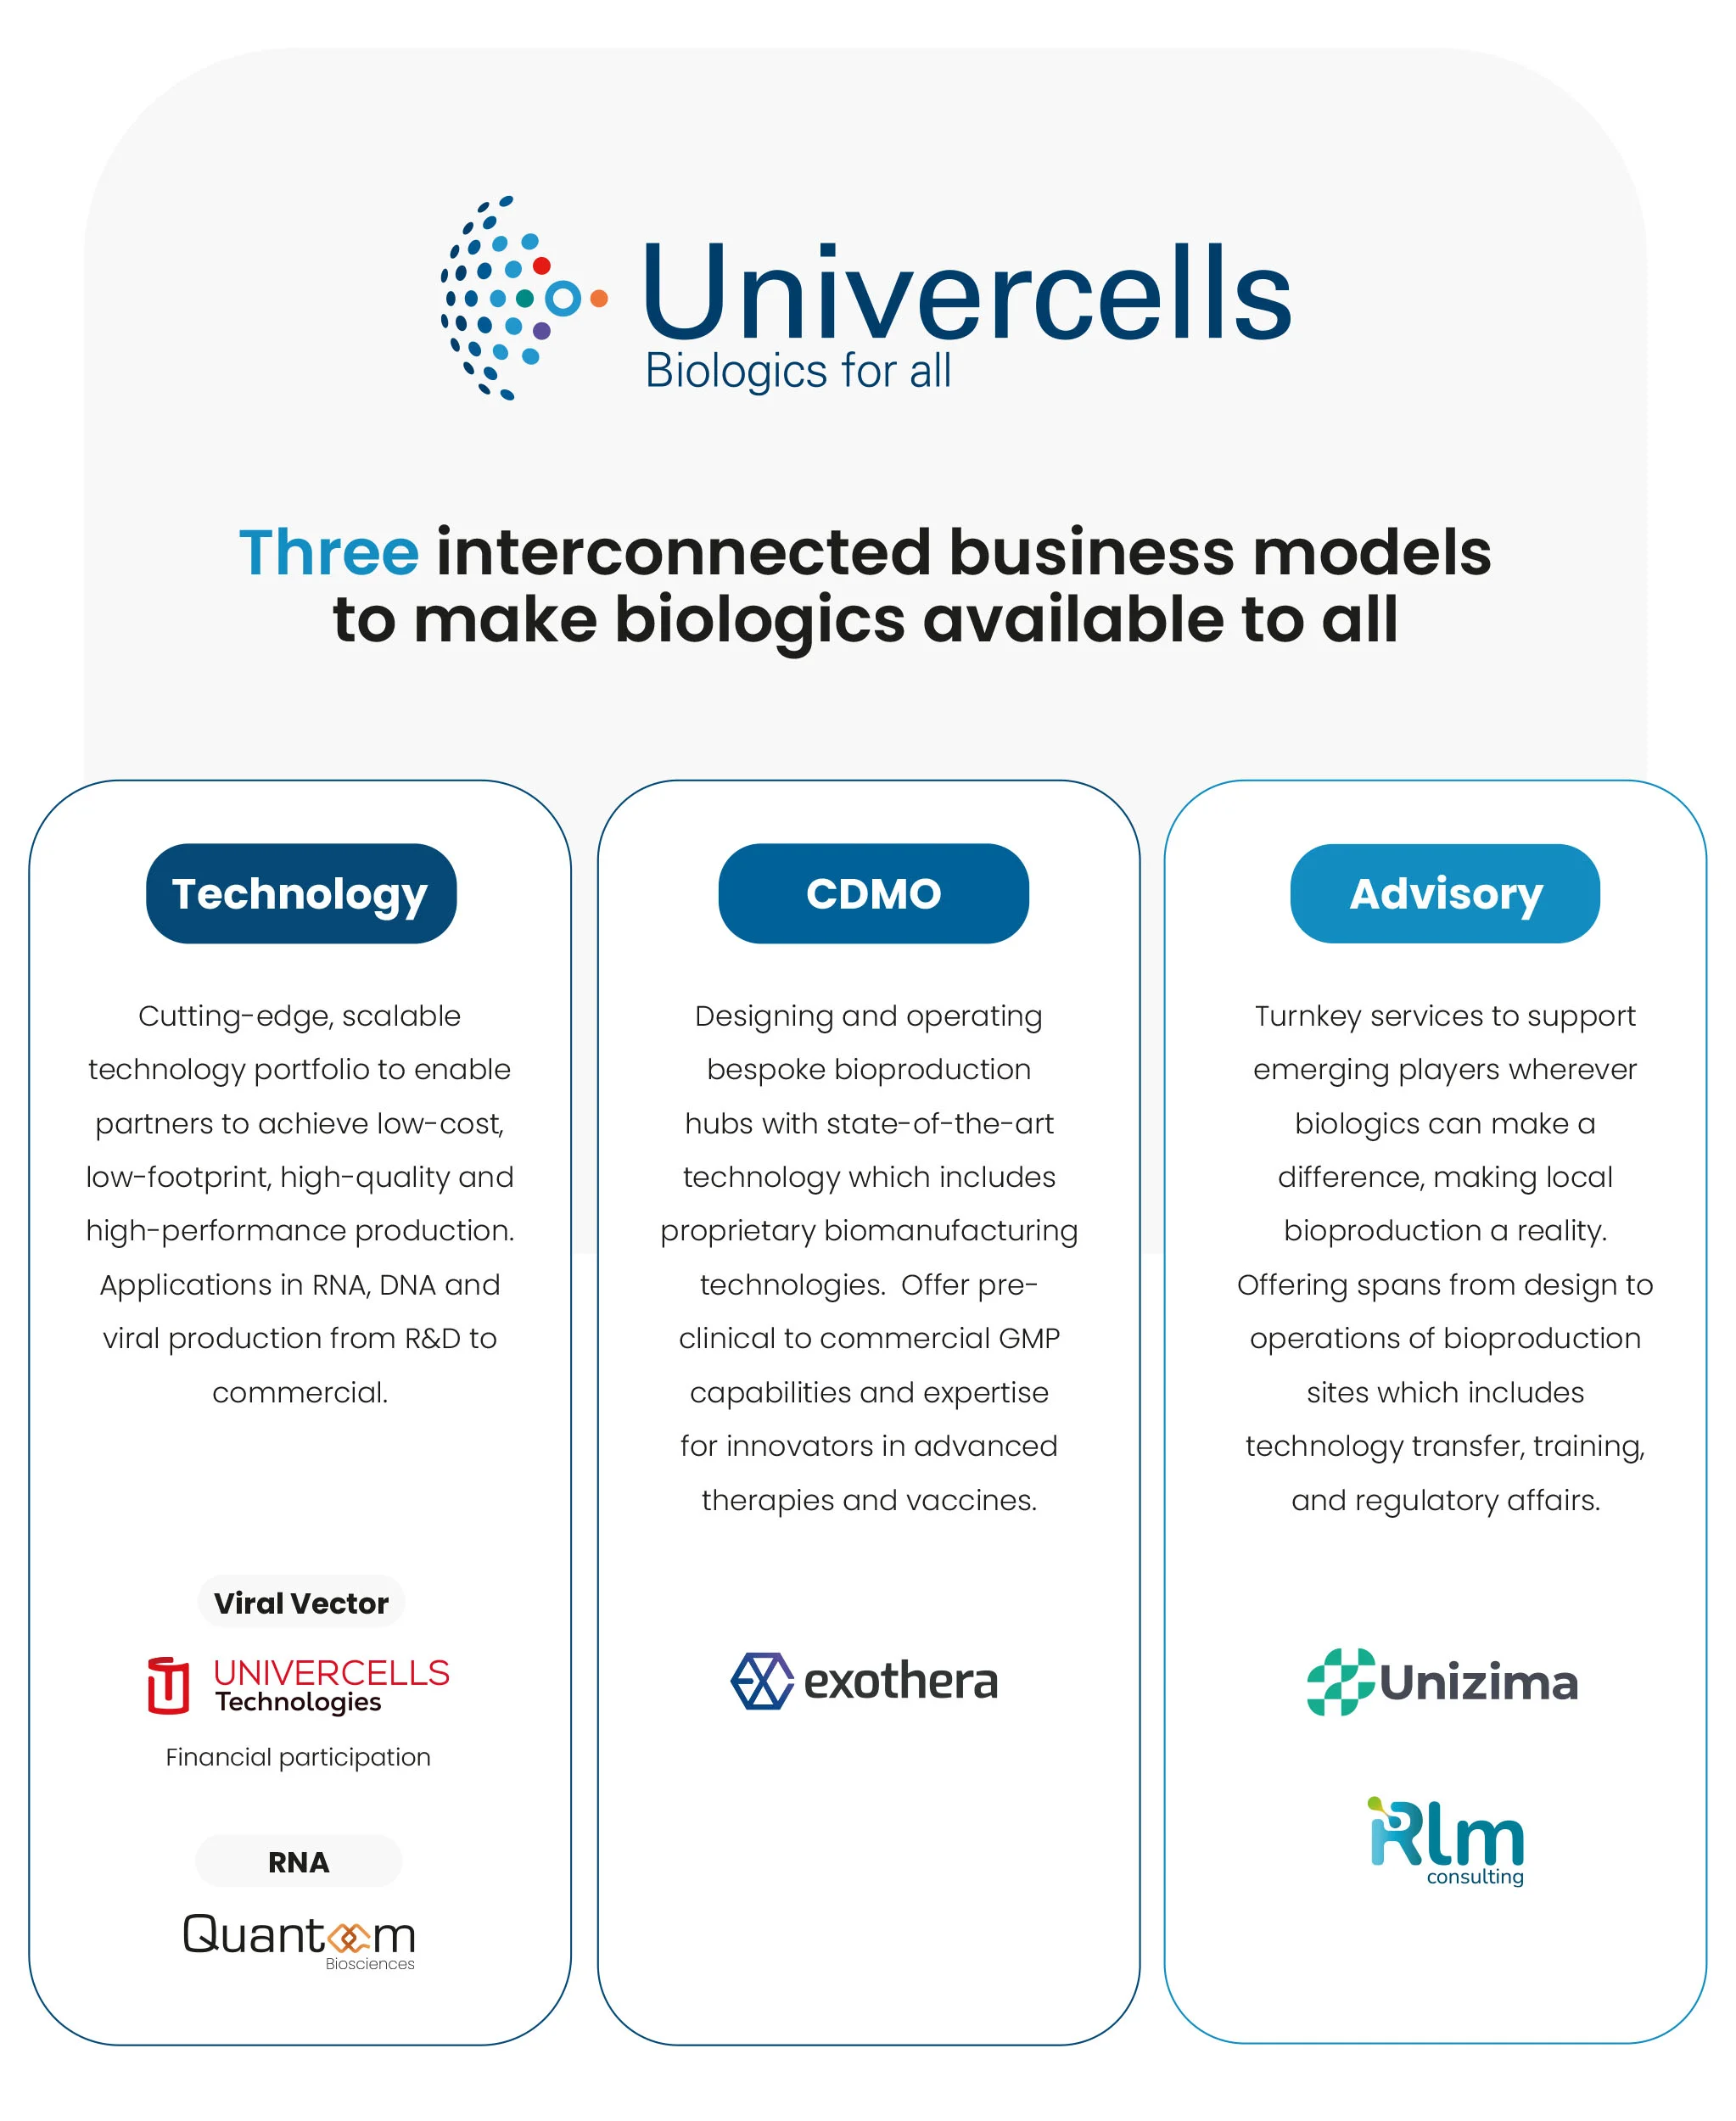 Three interconnected business models - Exothera - Quantoom Biosciences - Unizima - RLM